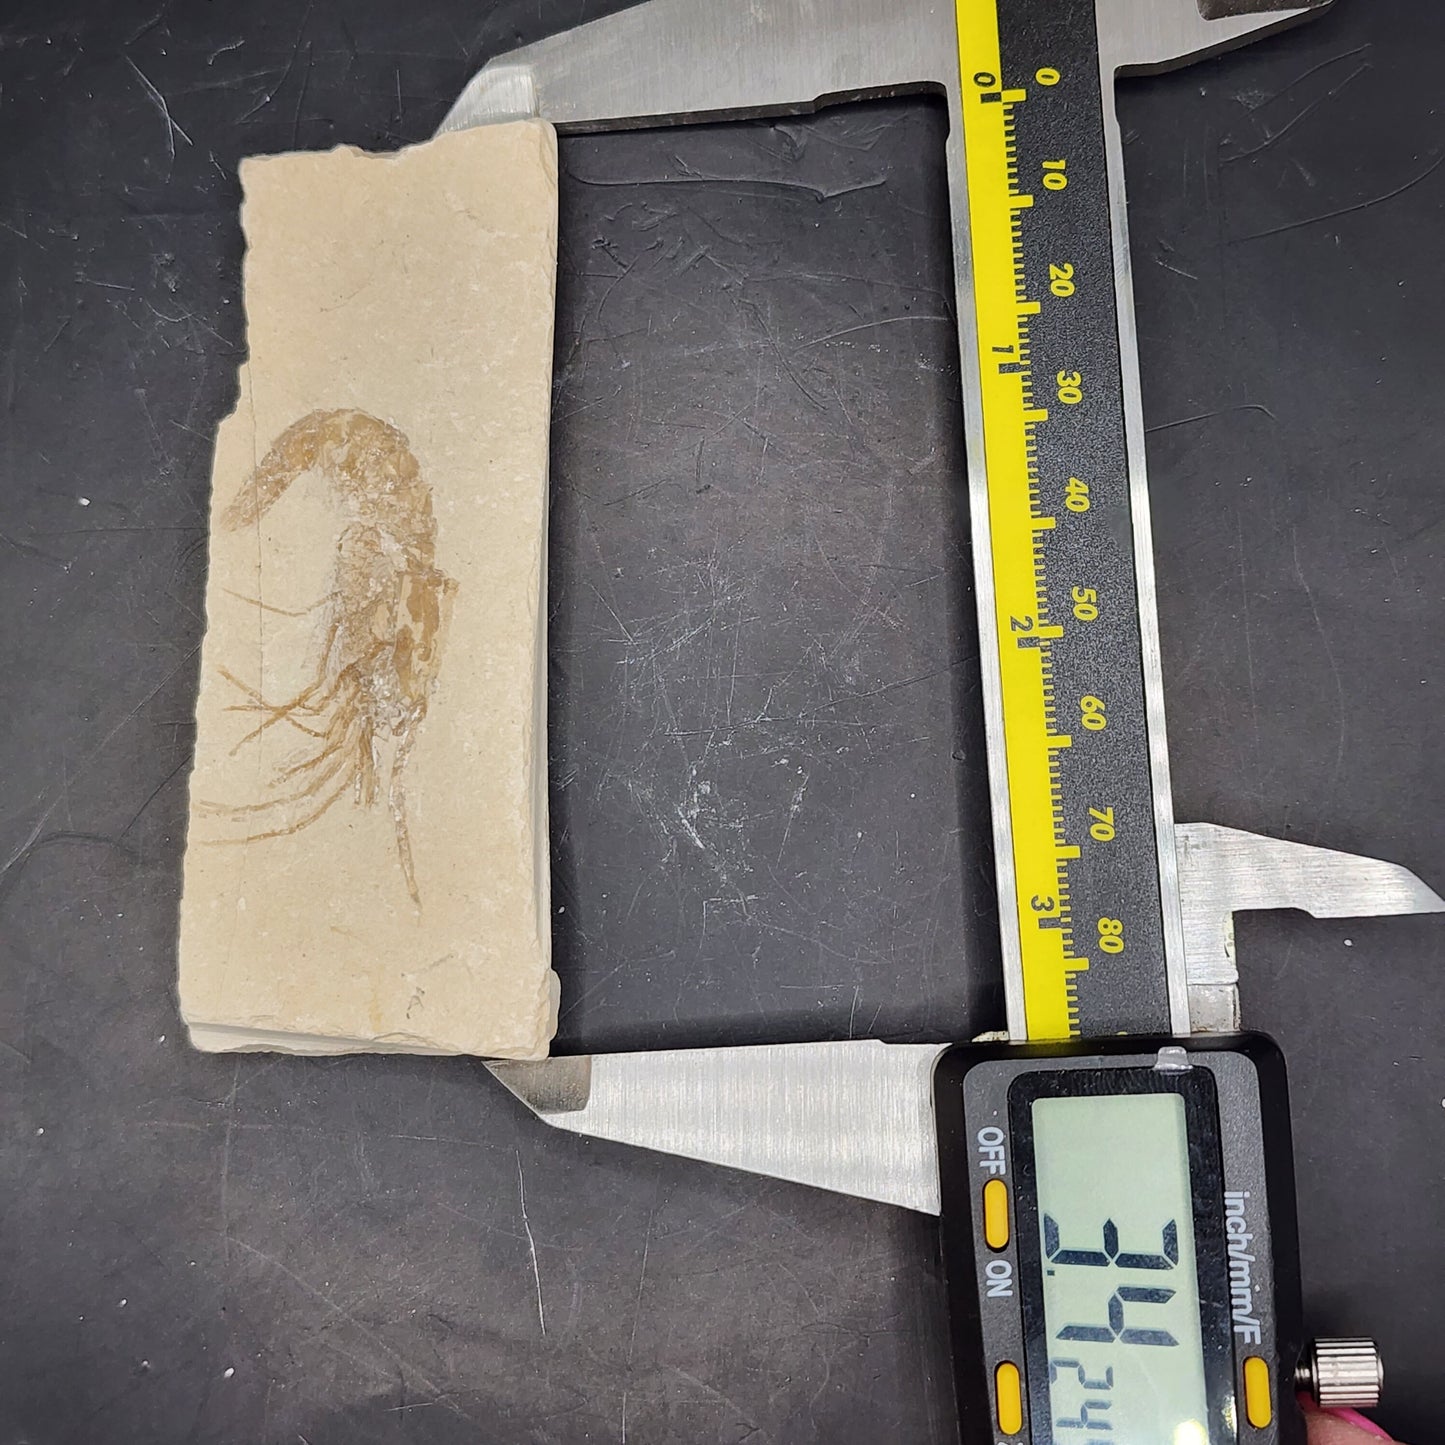 Detailed Fossilized Shrimp